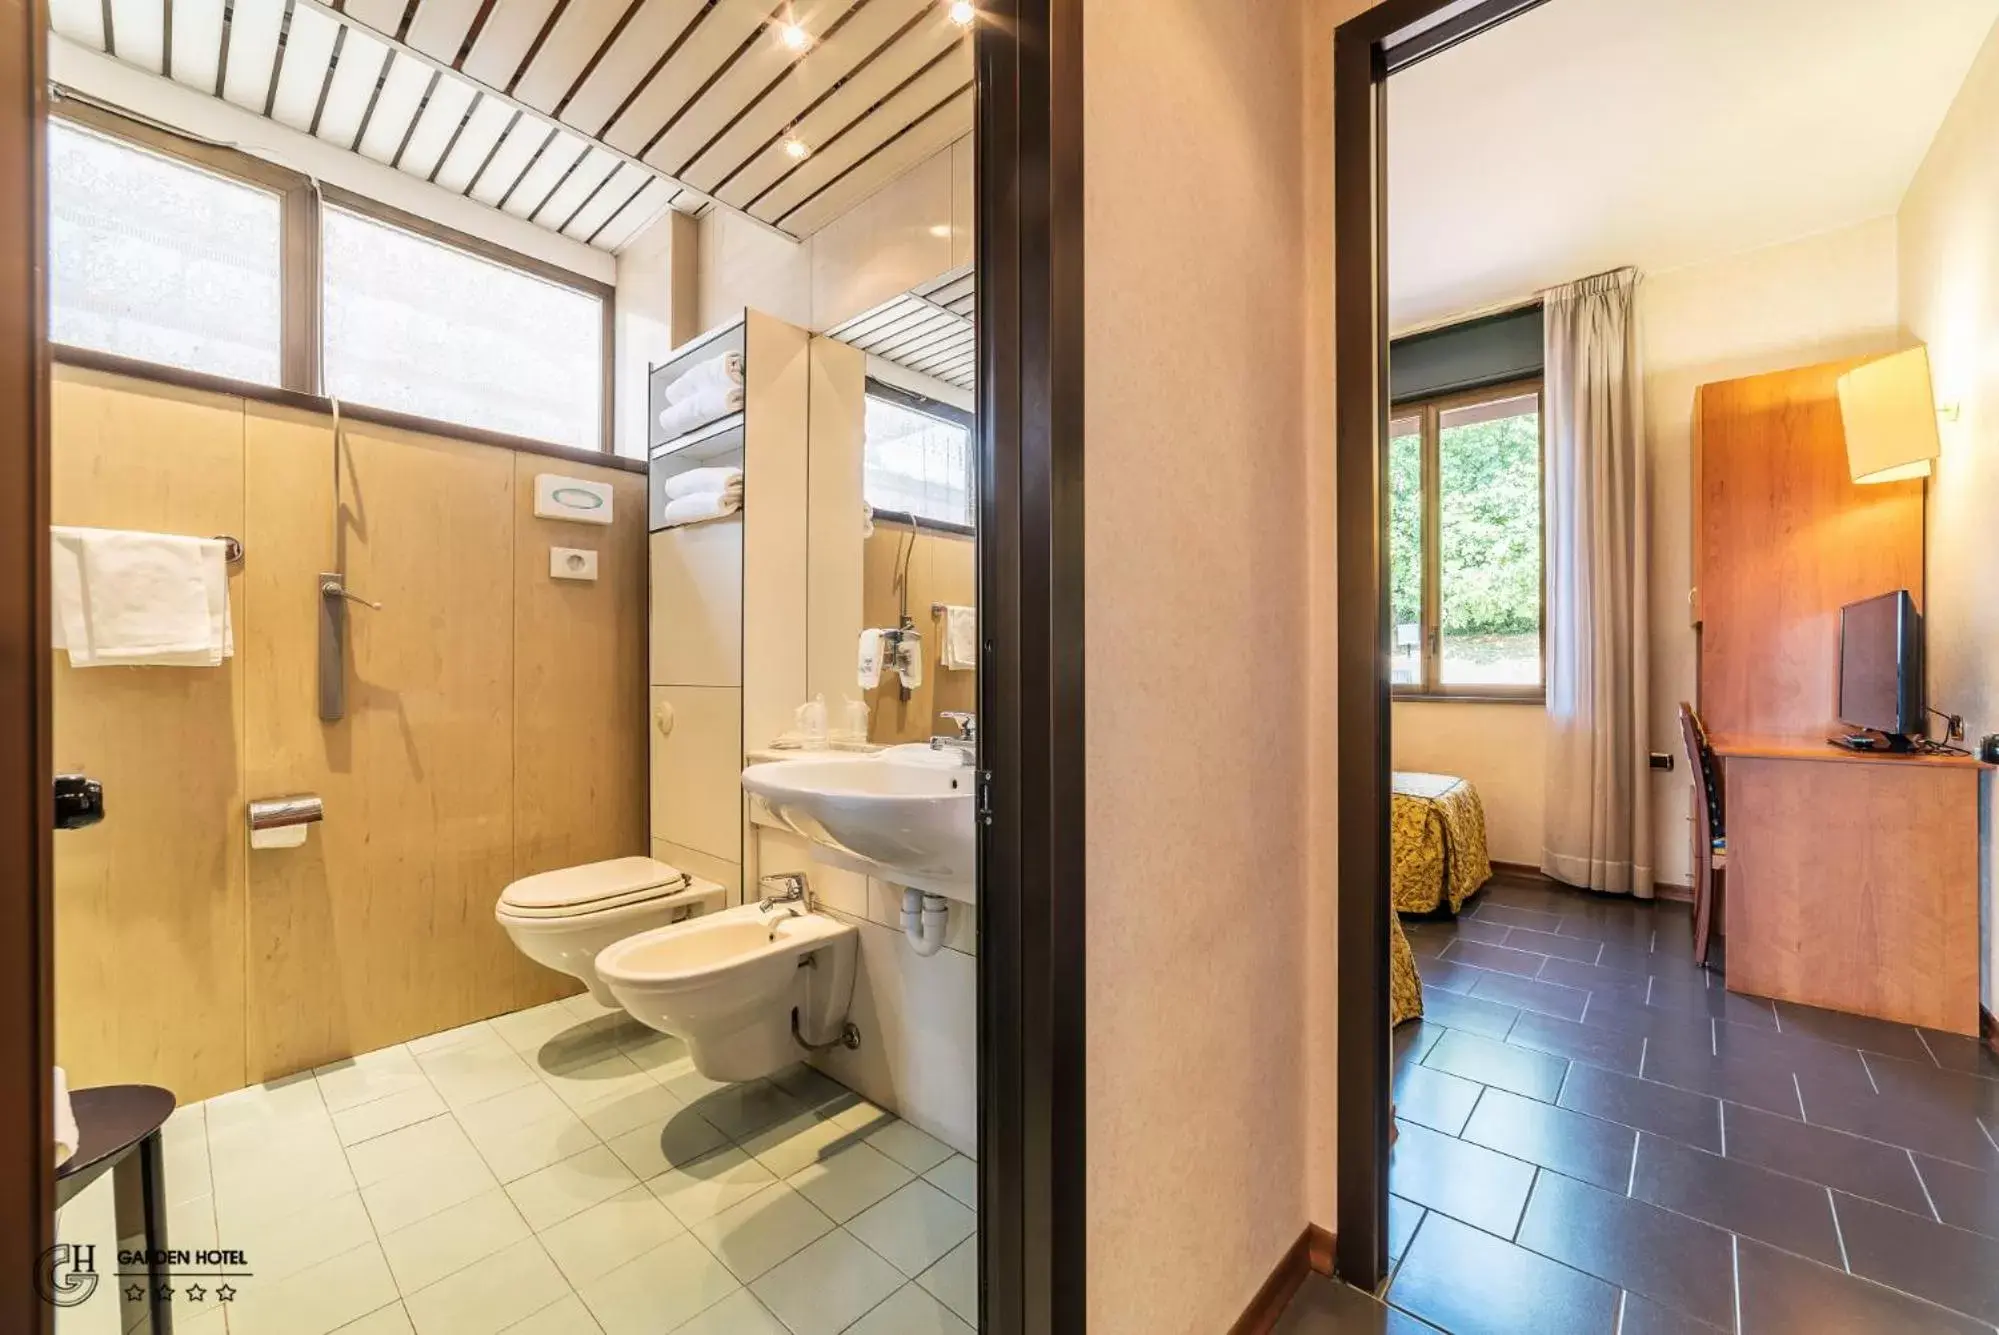 Photo of the whole room, Bathroom in Hotel Garden Terni